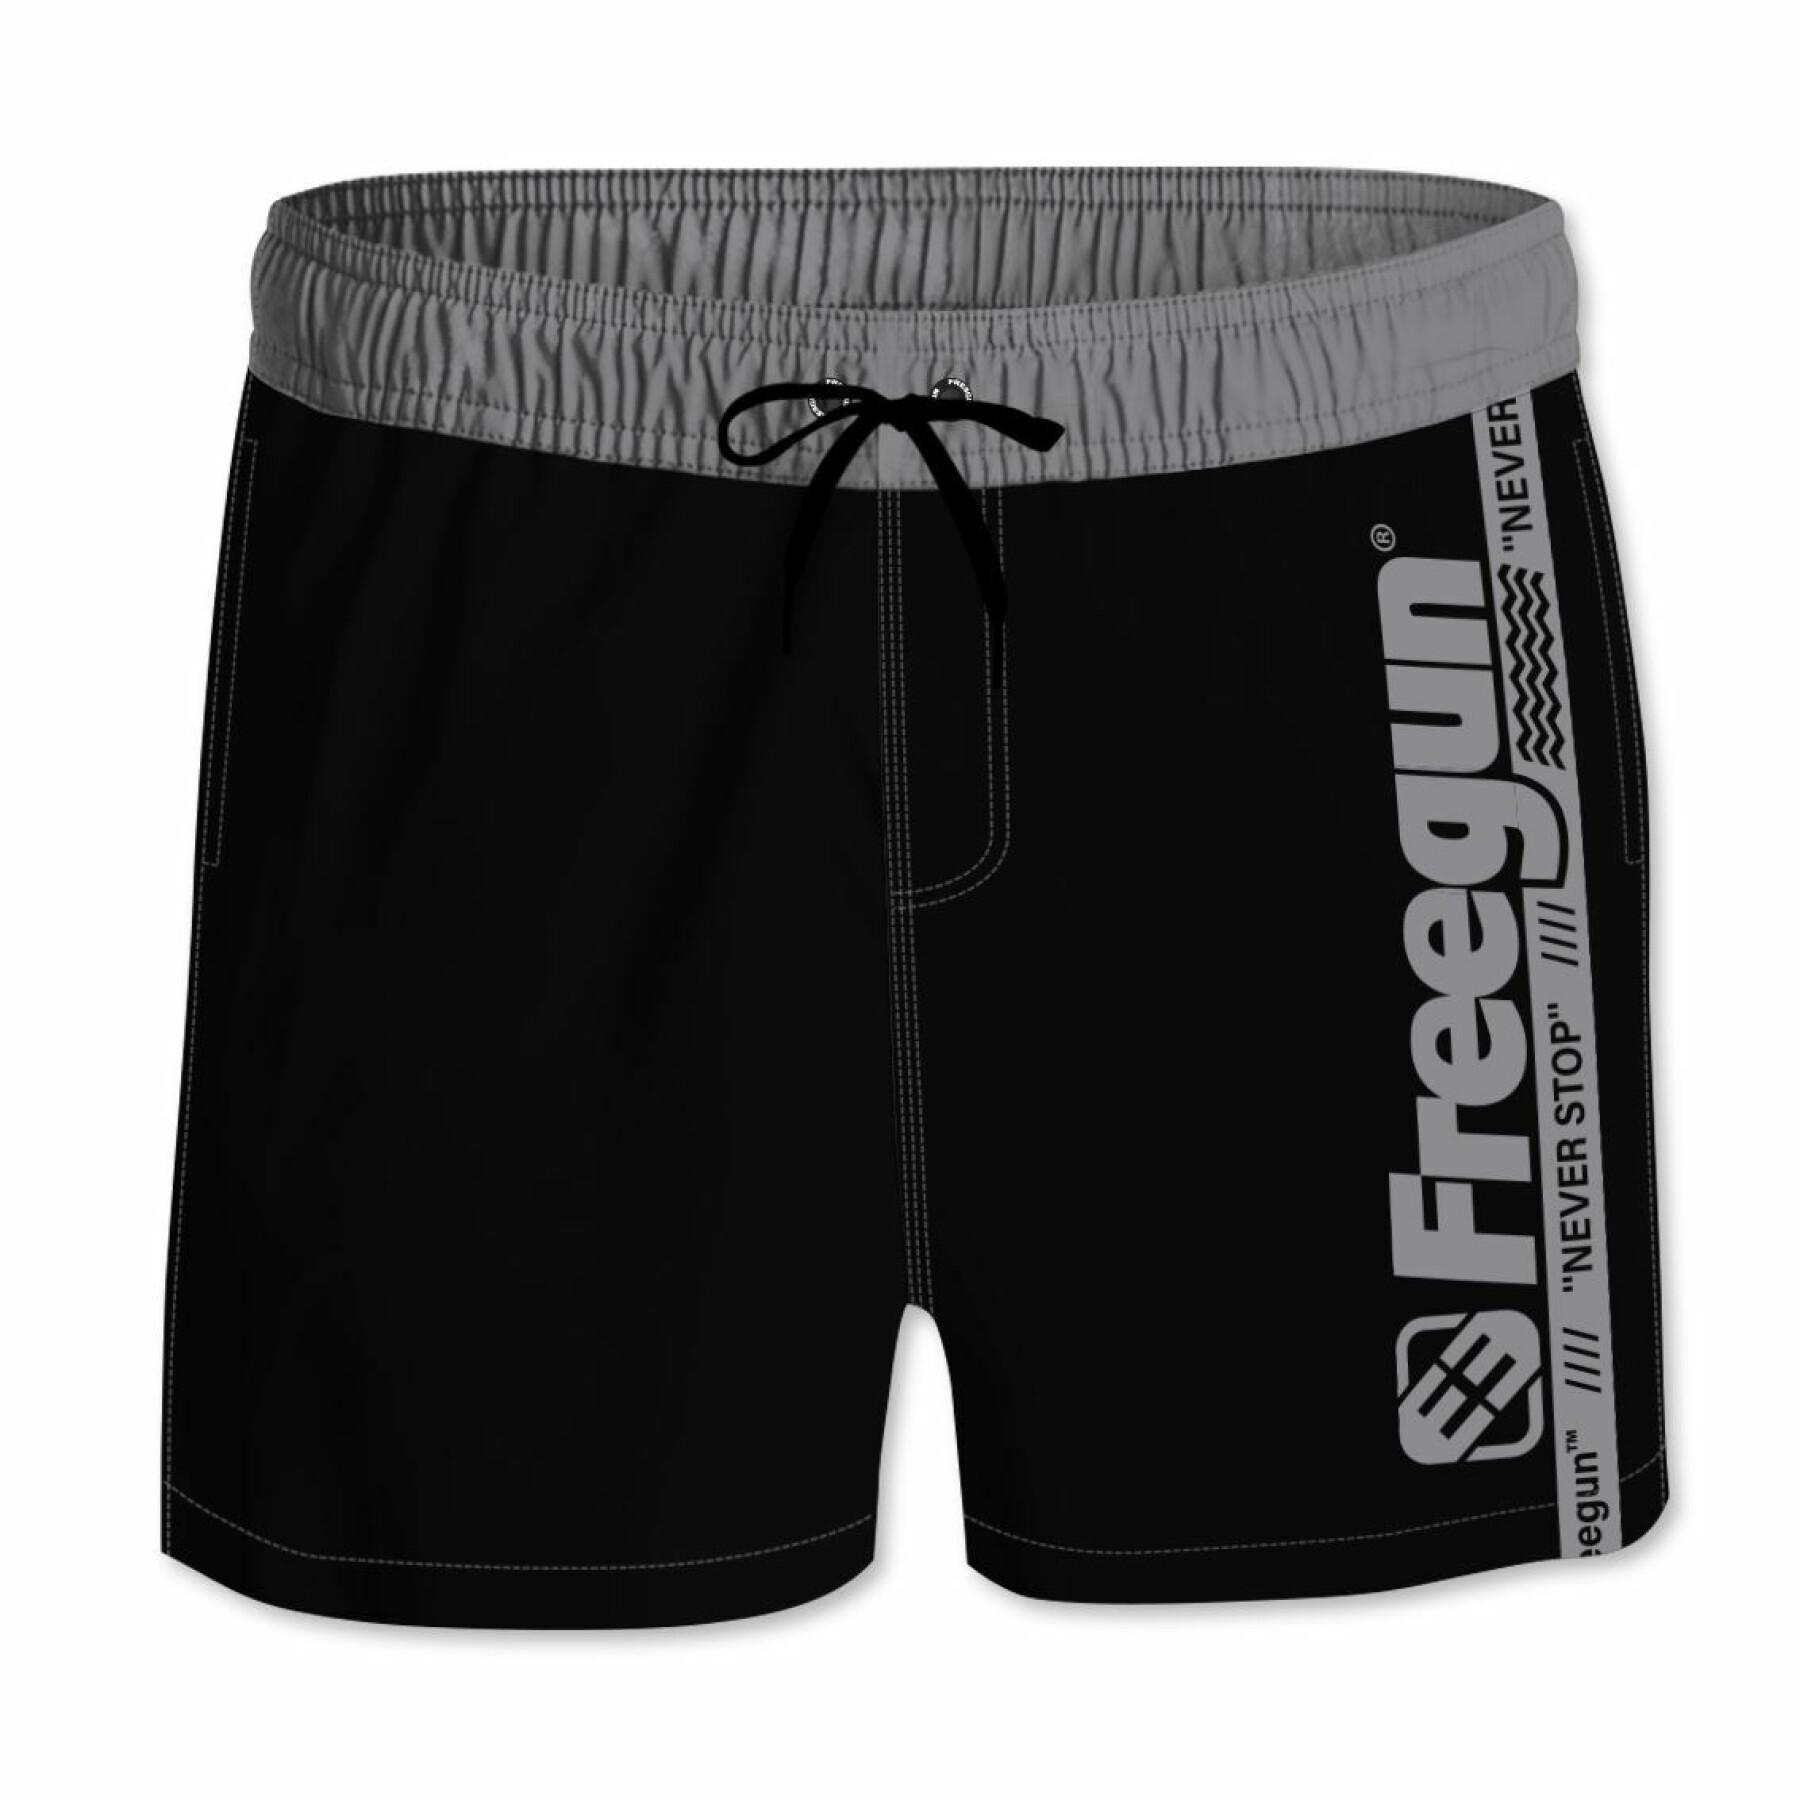 Short swim shorts with elastic waistband Freegun